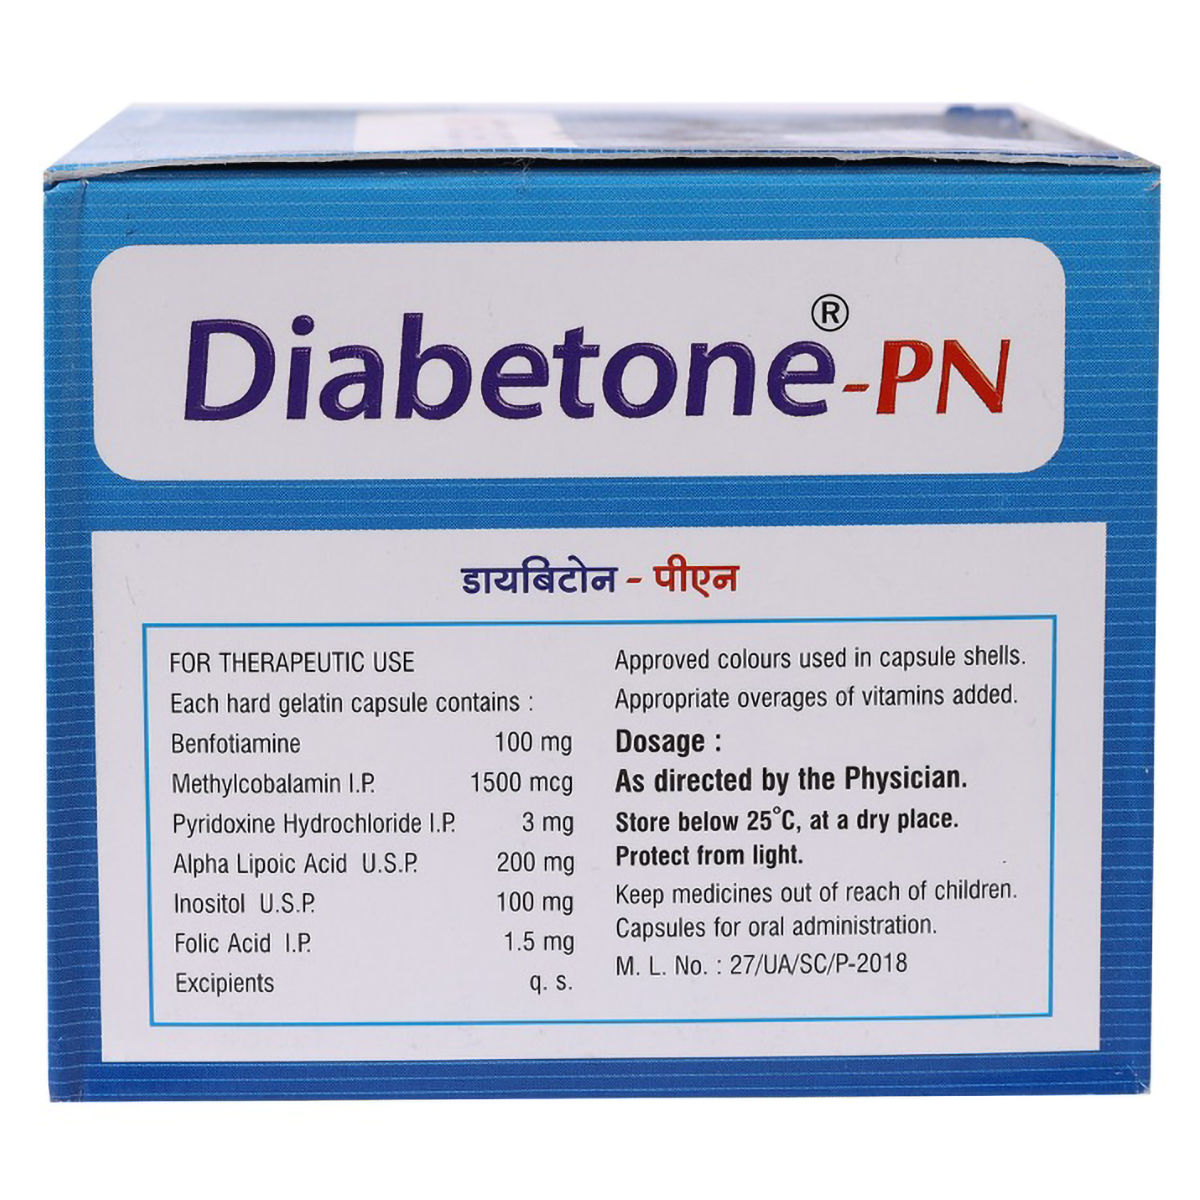 Diabetone PN Capsule 15's, Pack of 15 CAPSULES